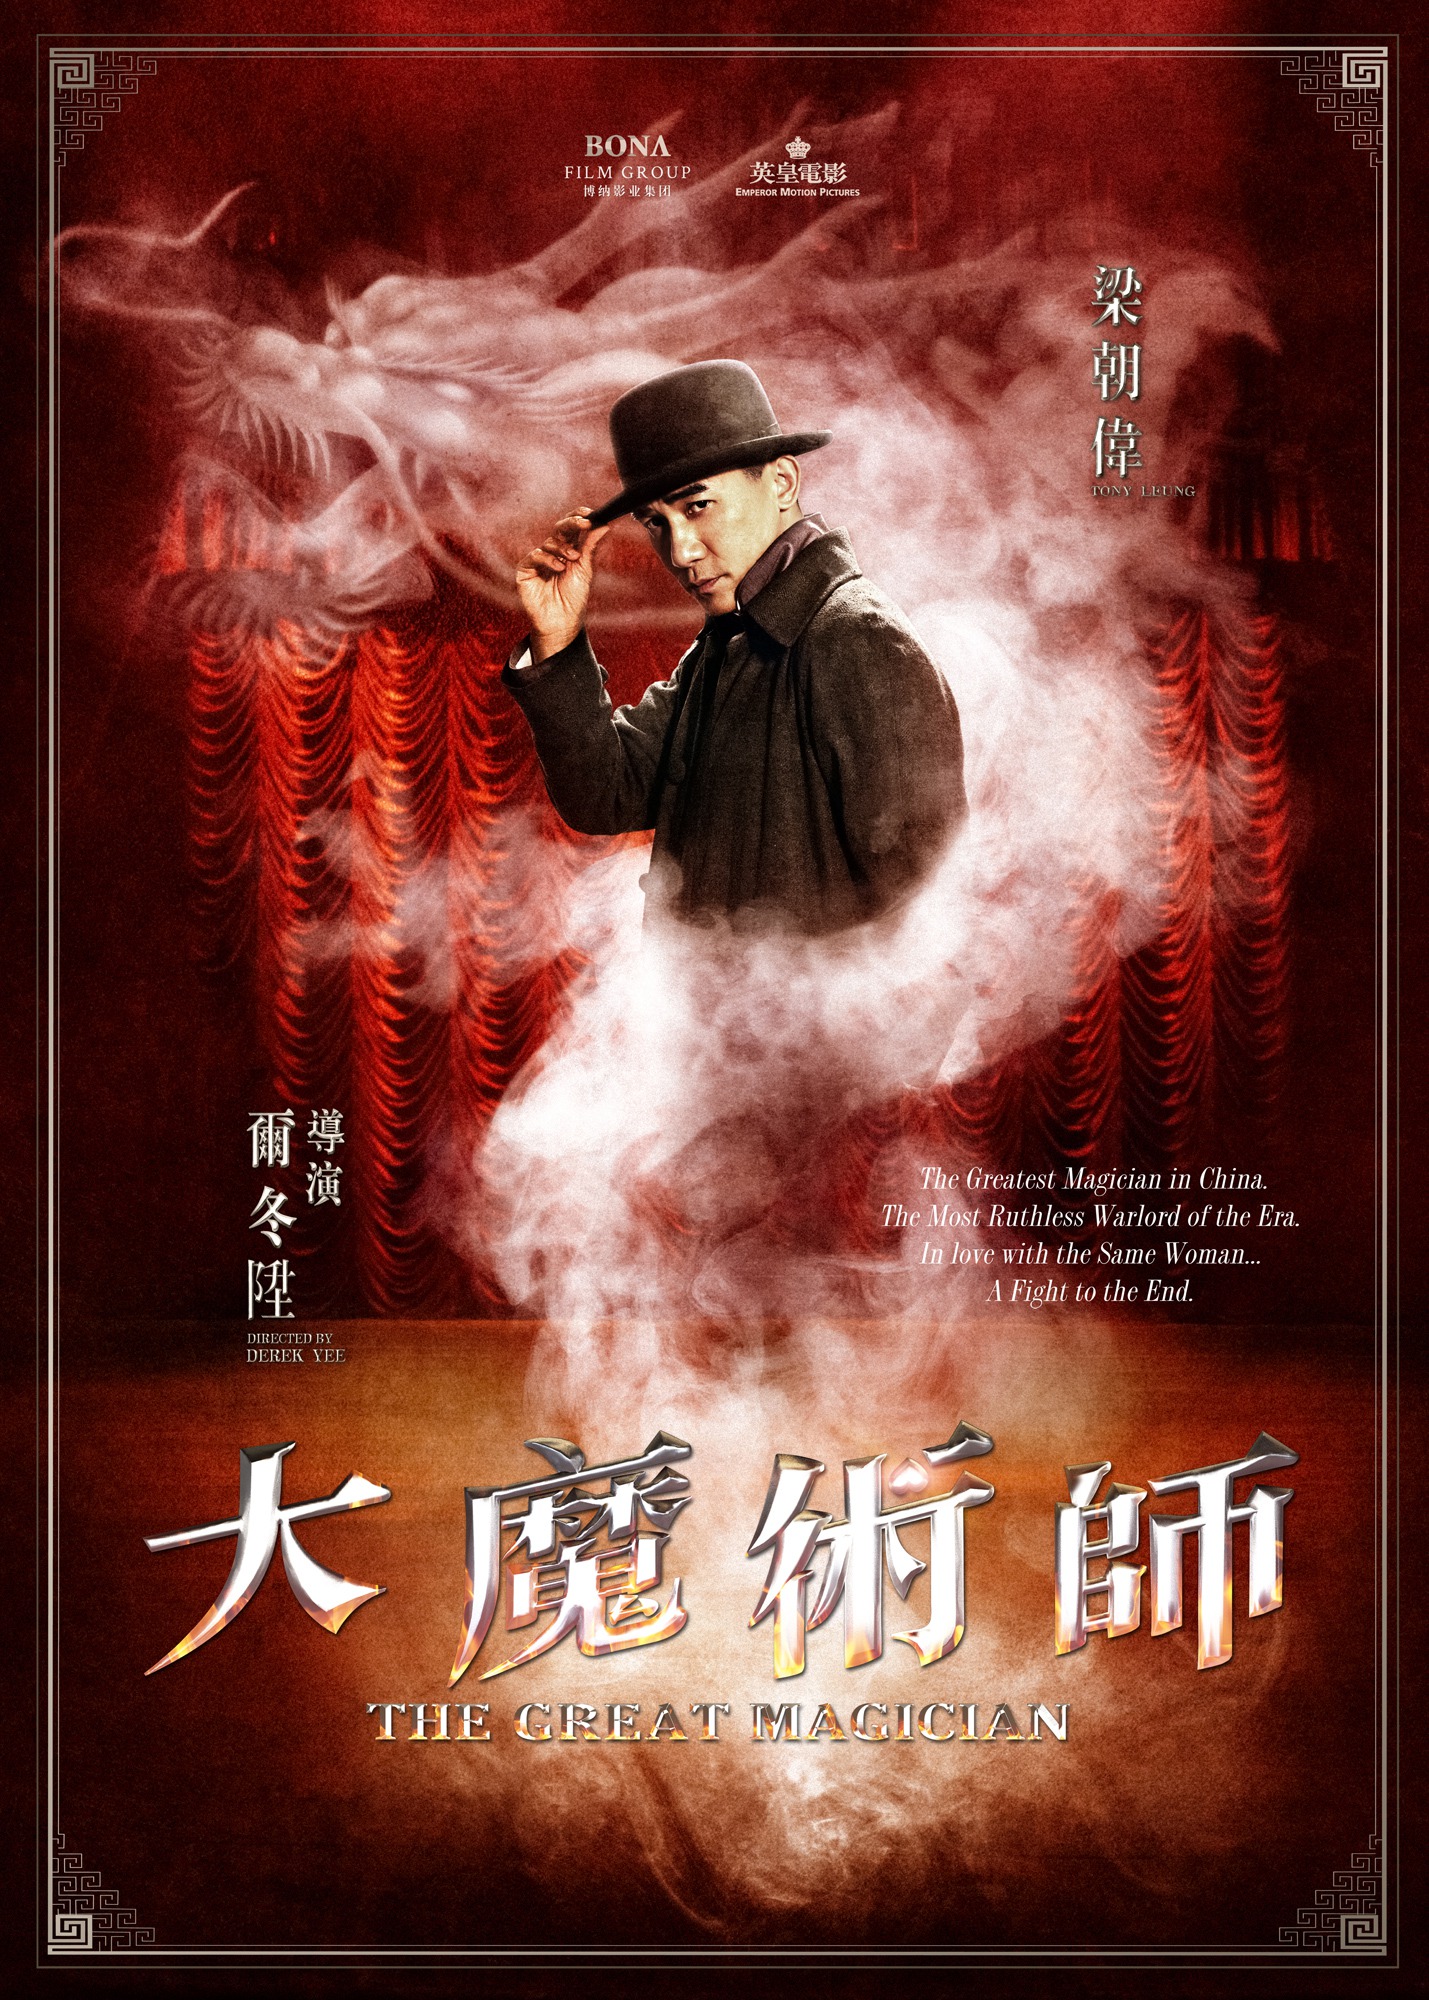 Mega Sized Movie Poster Image for Daai mo seut si (#4 of 5)